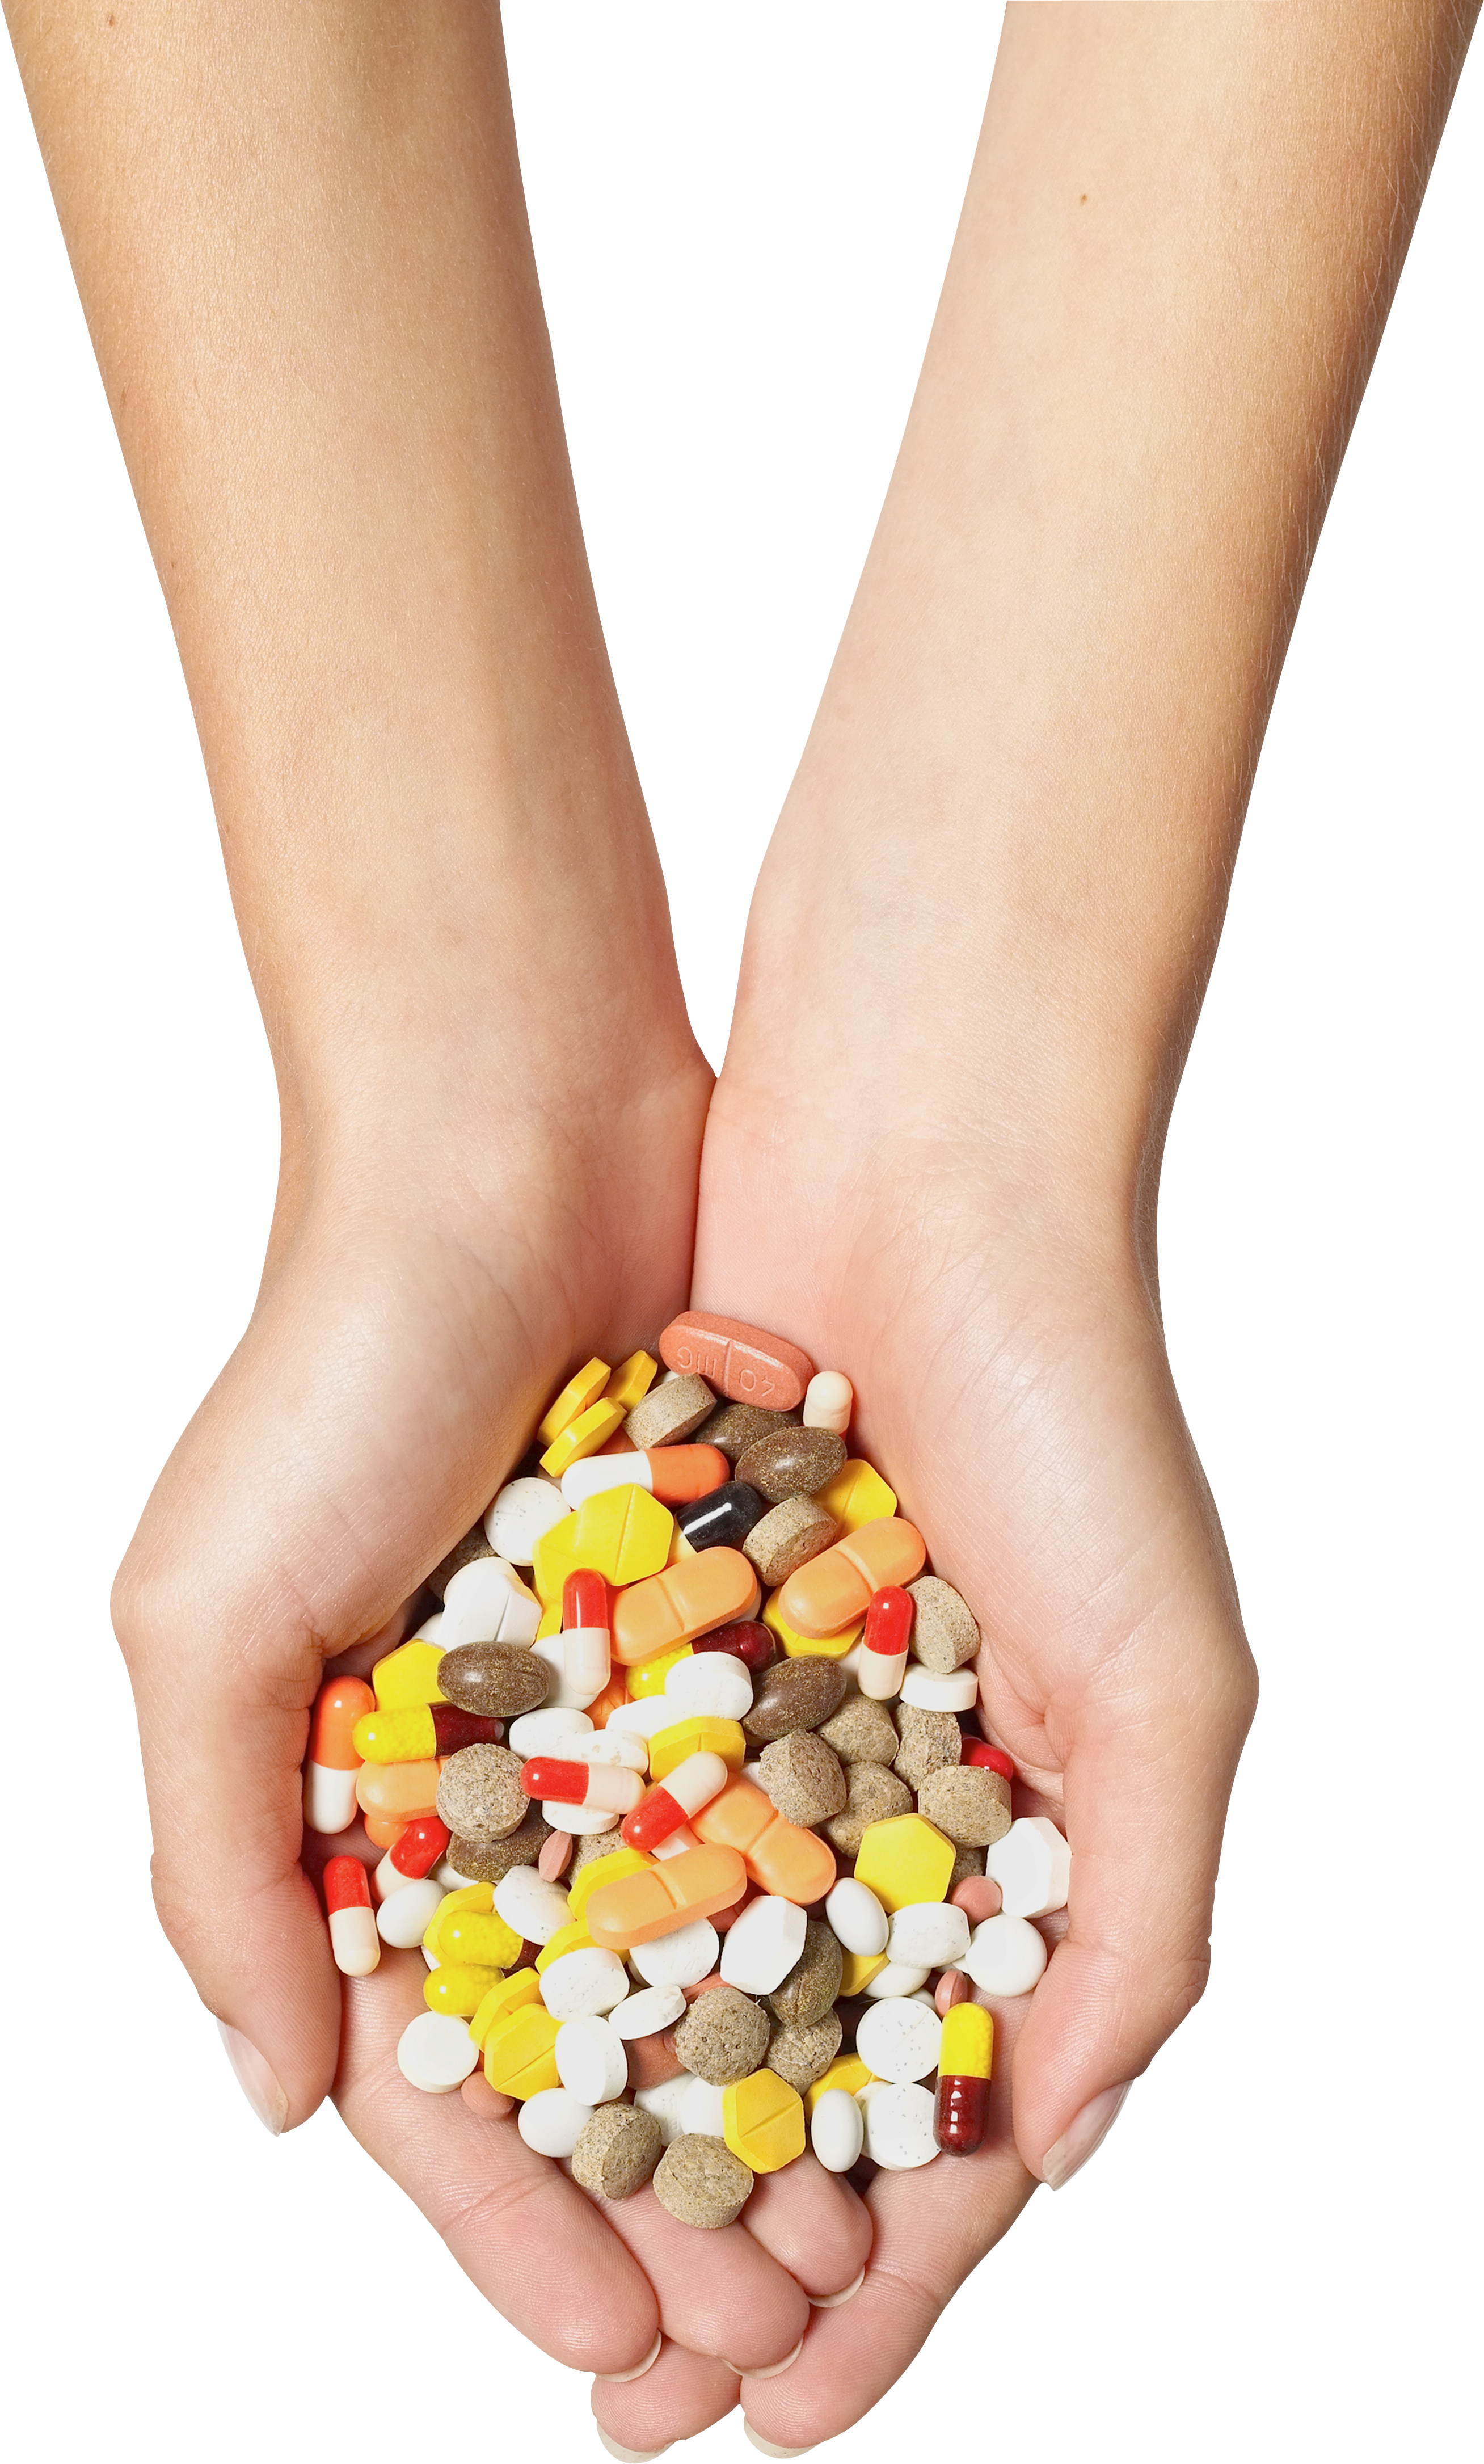 Pilules en main